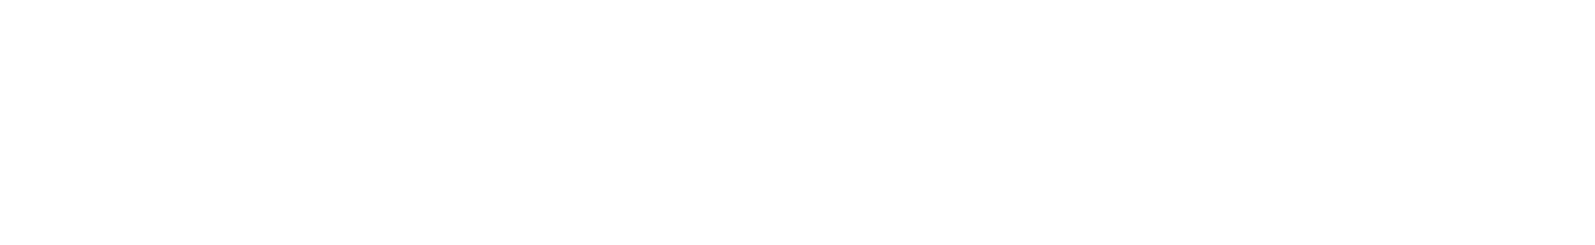 OVH Groupe logo grand pour les fonds sombres (PNG transparent)